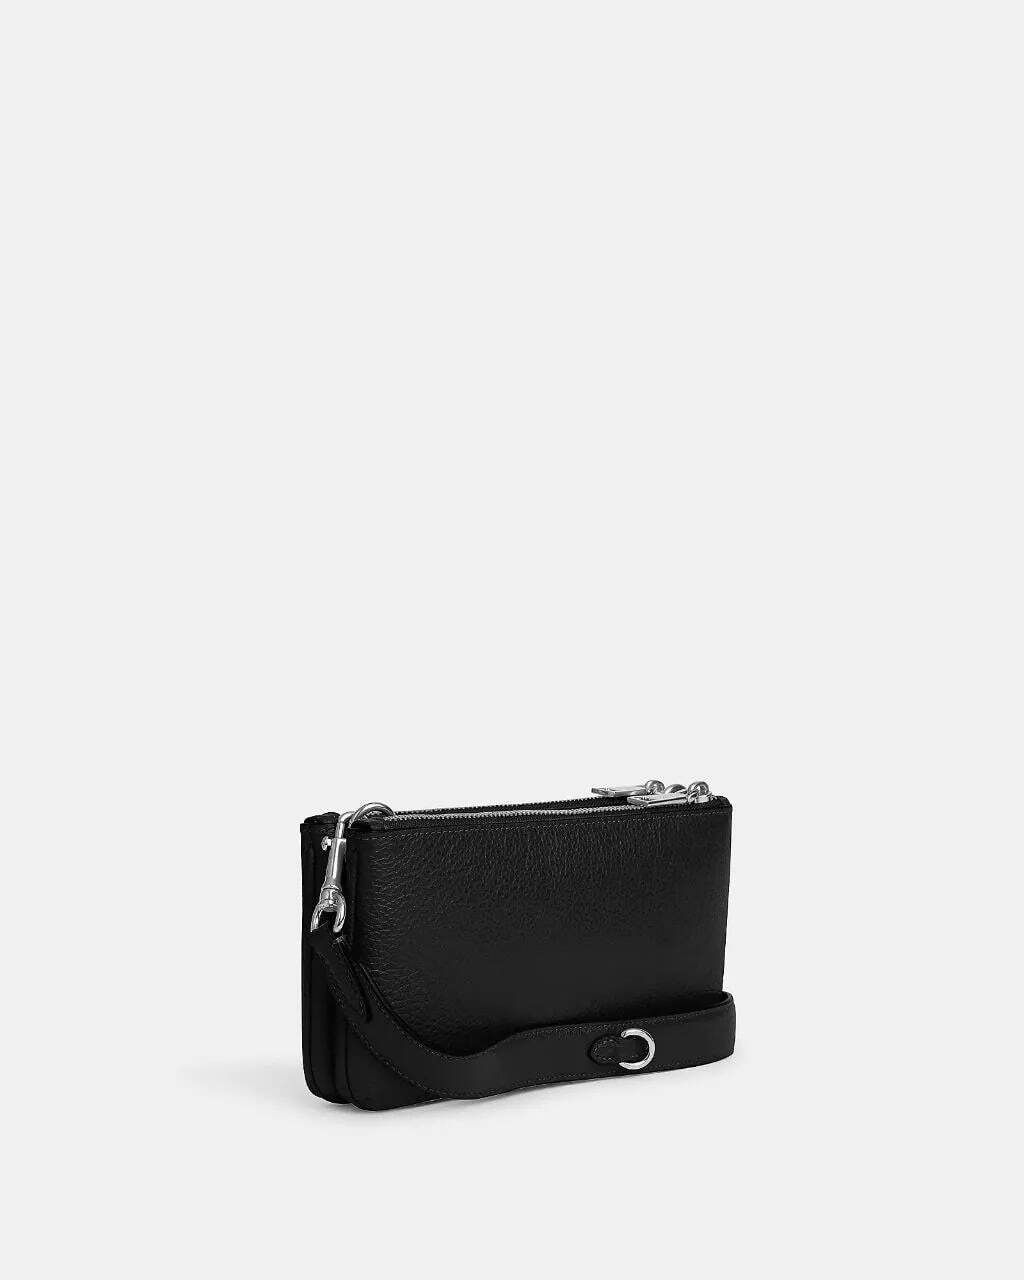 handbagbranded.com getlush outlet personalshopper usa malaysia ready stock COACH DOUBLE ZIP CROSSBODY  3